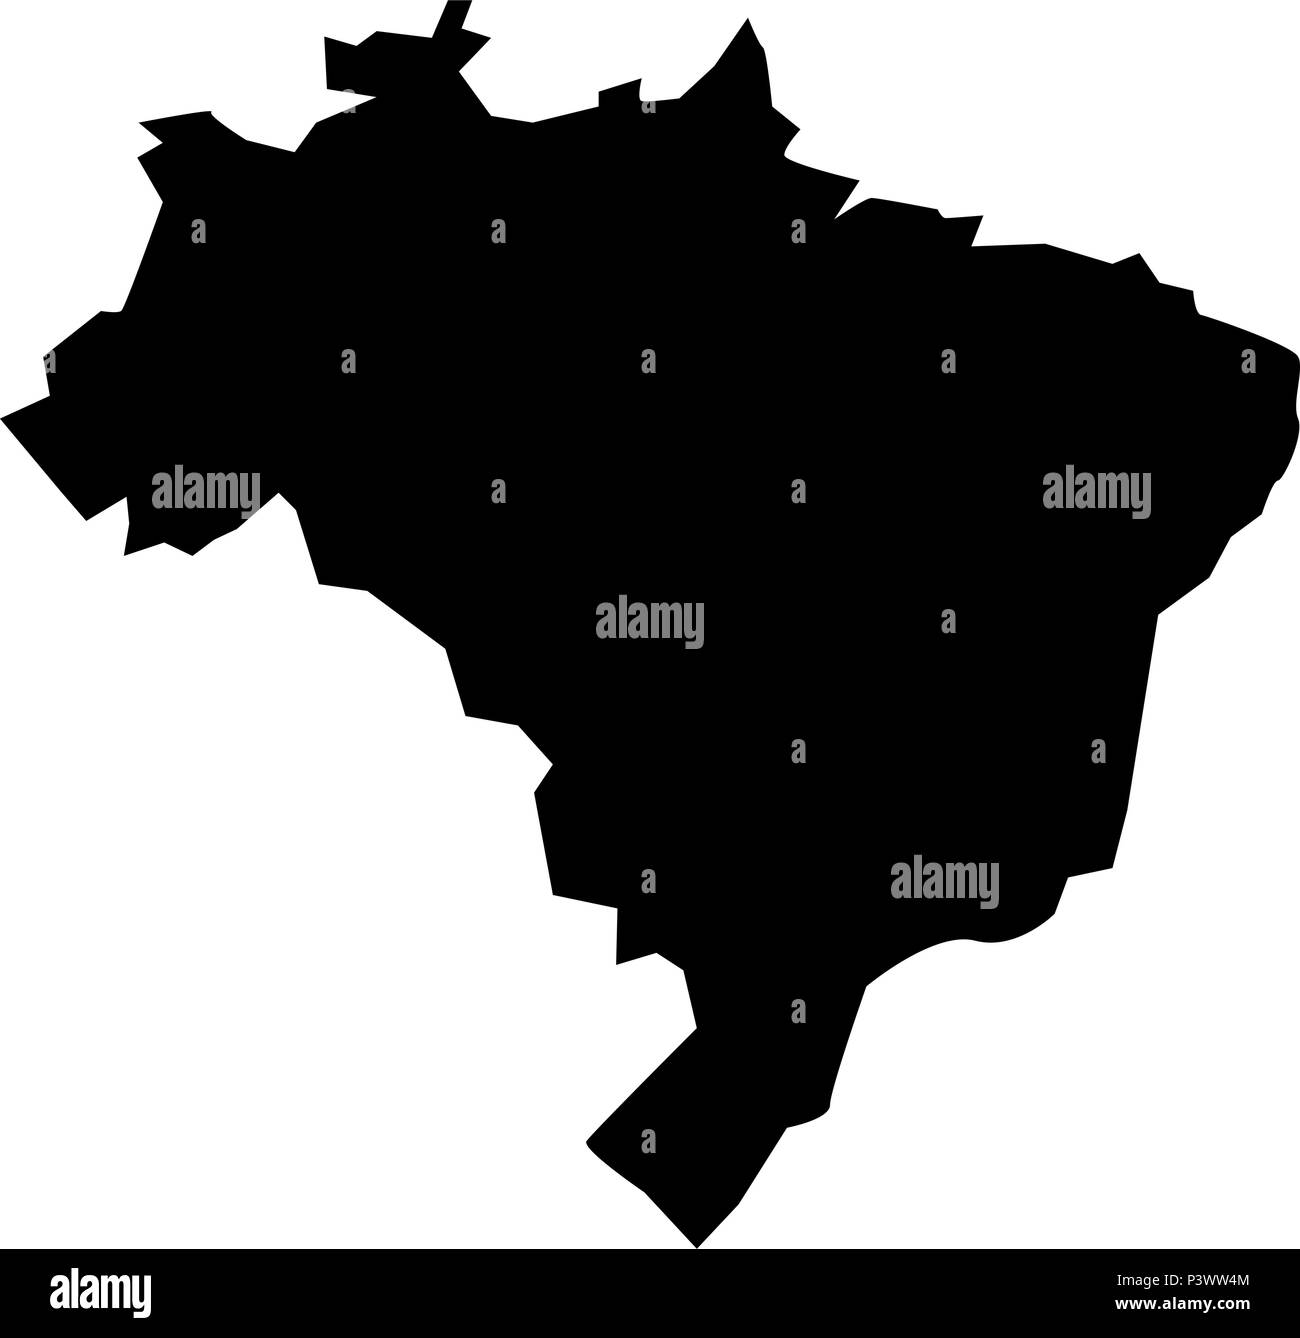 Karte von Brasilien Symbol Farbe schwarz Vektor I Stil einfach Bild Stock Vektor